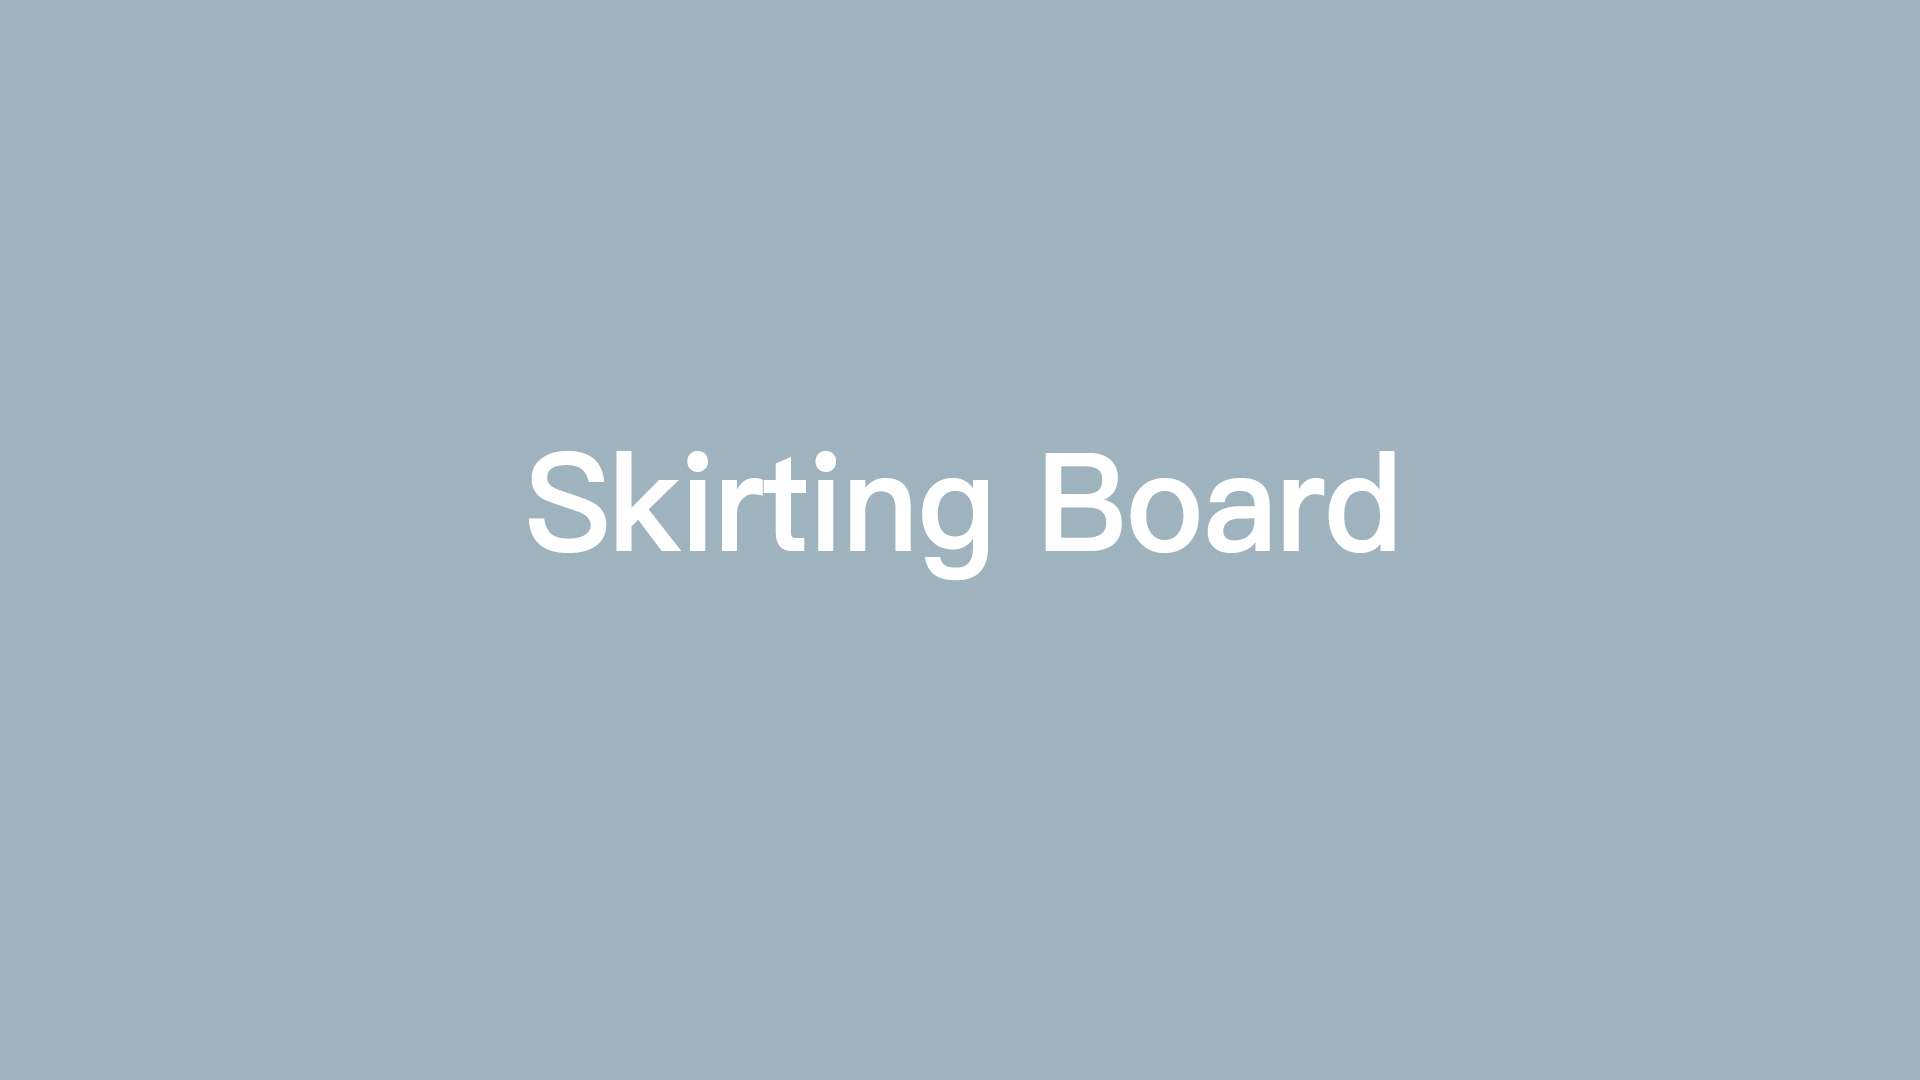 Skirting Board	